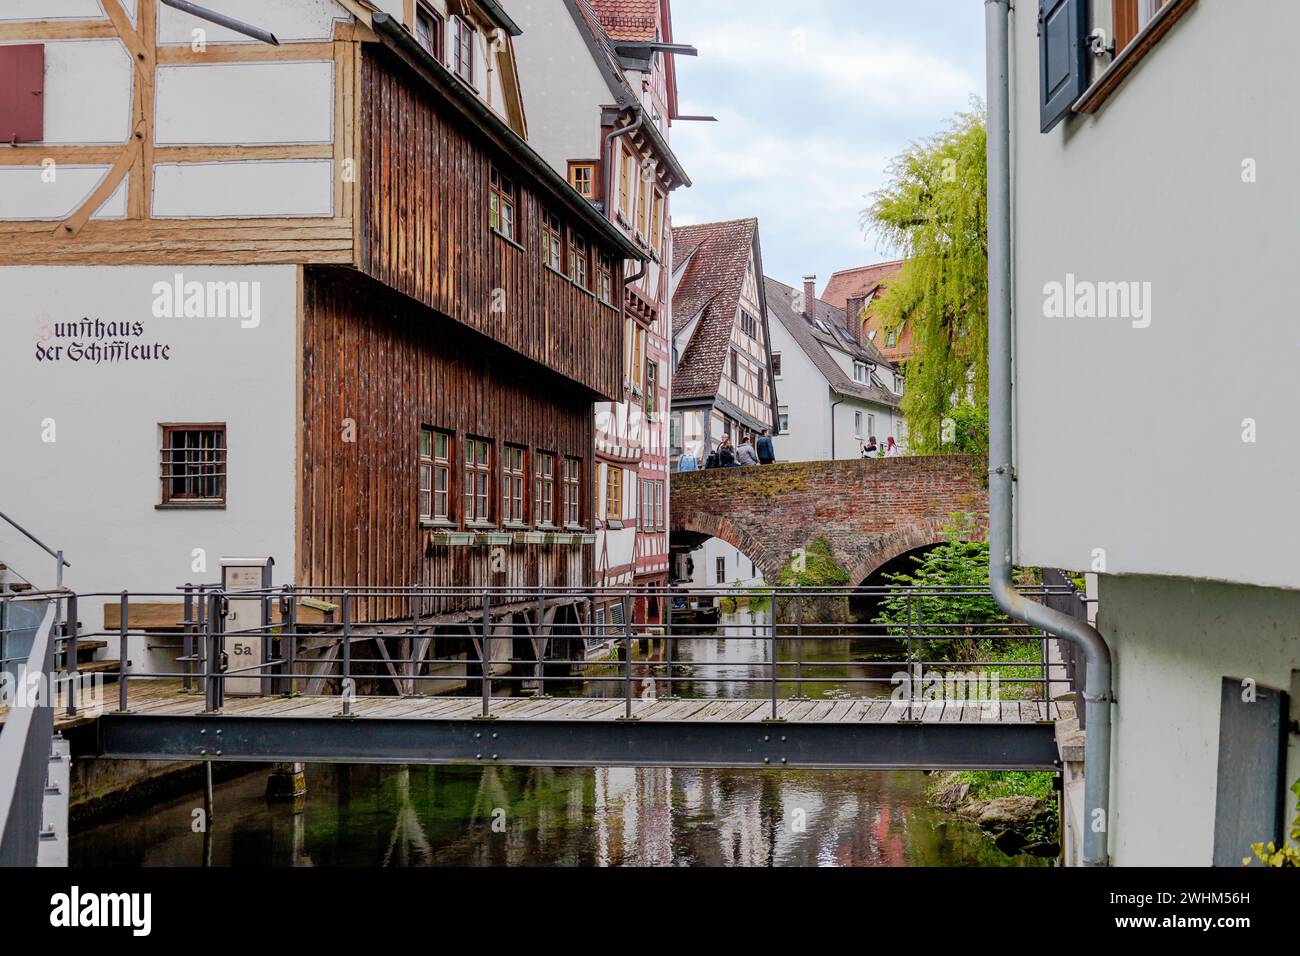 Fishermen's quarter of Ulm, guild house and bridges over the river Blau, Germany Stock Photo